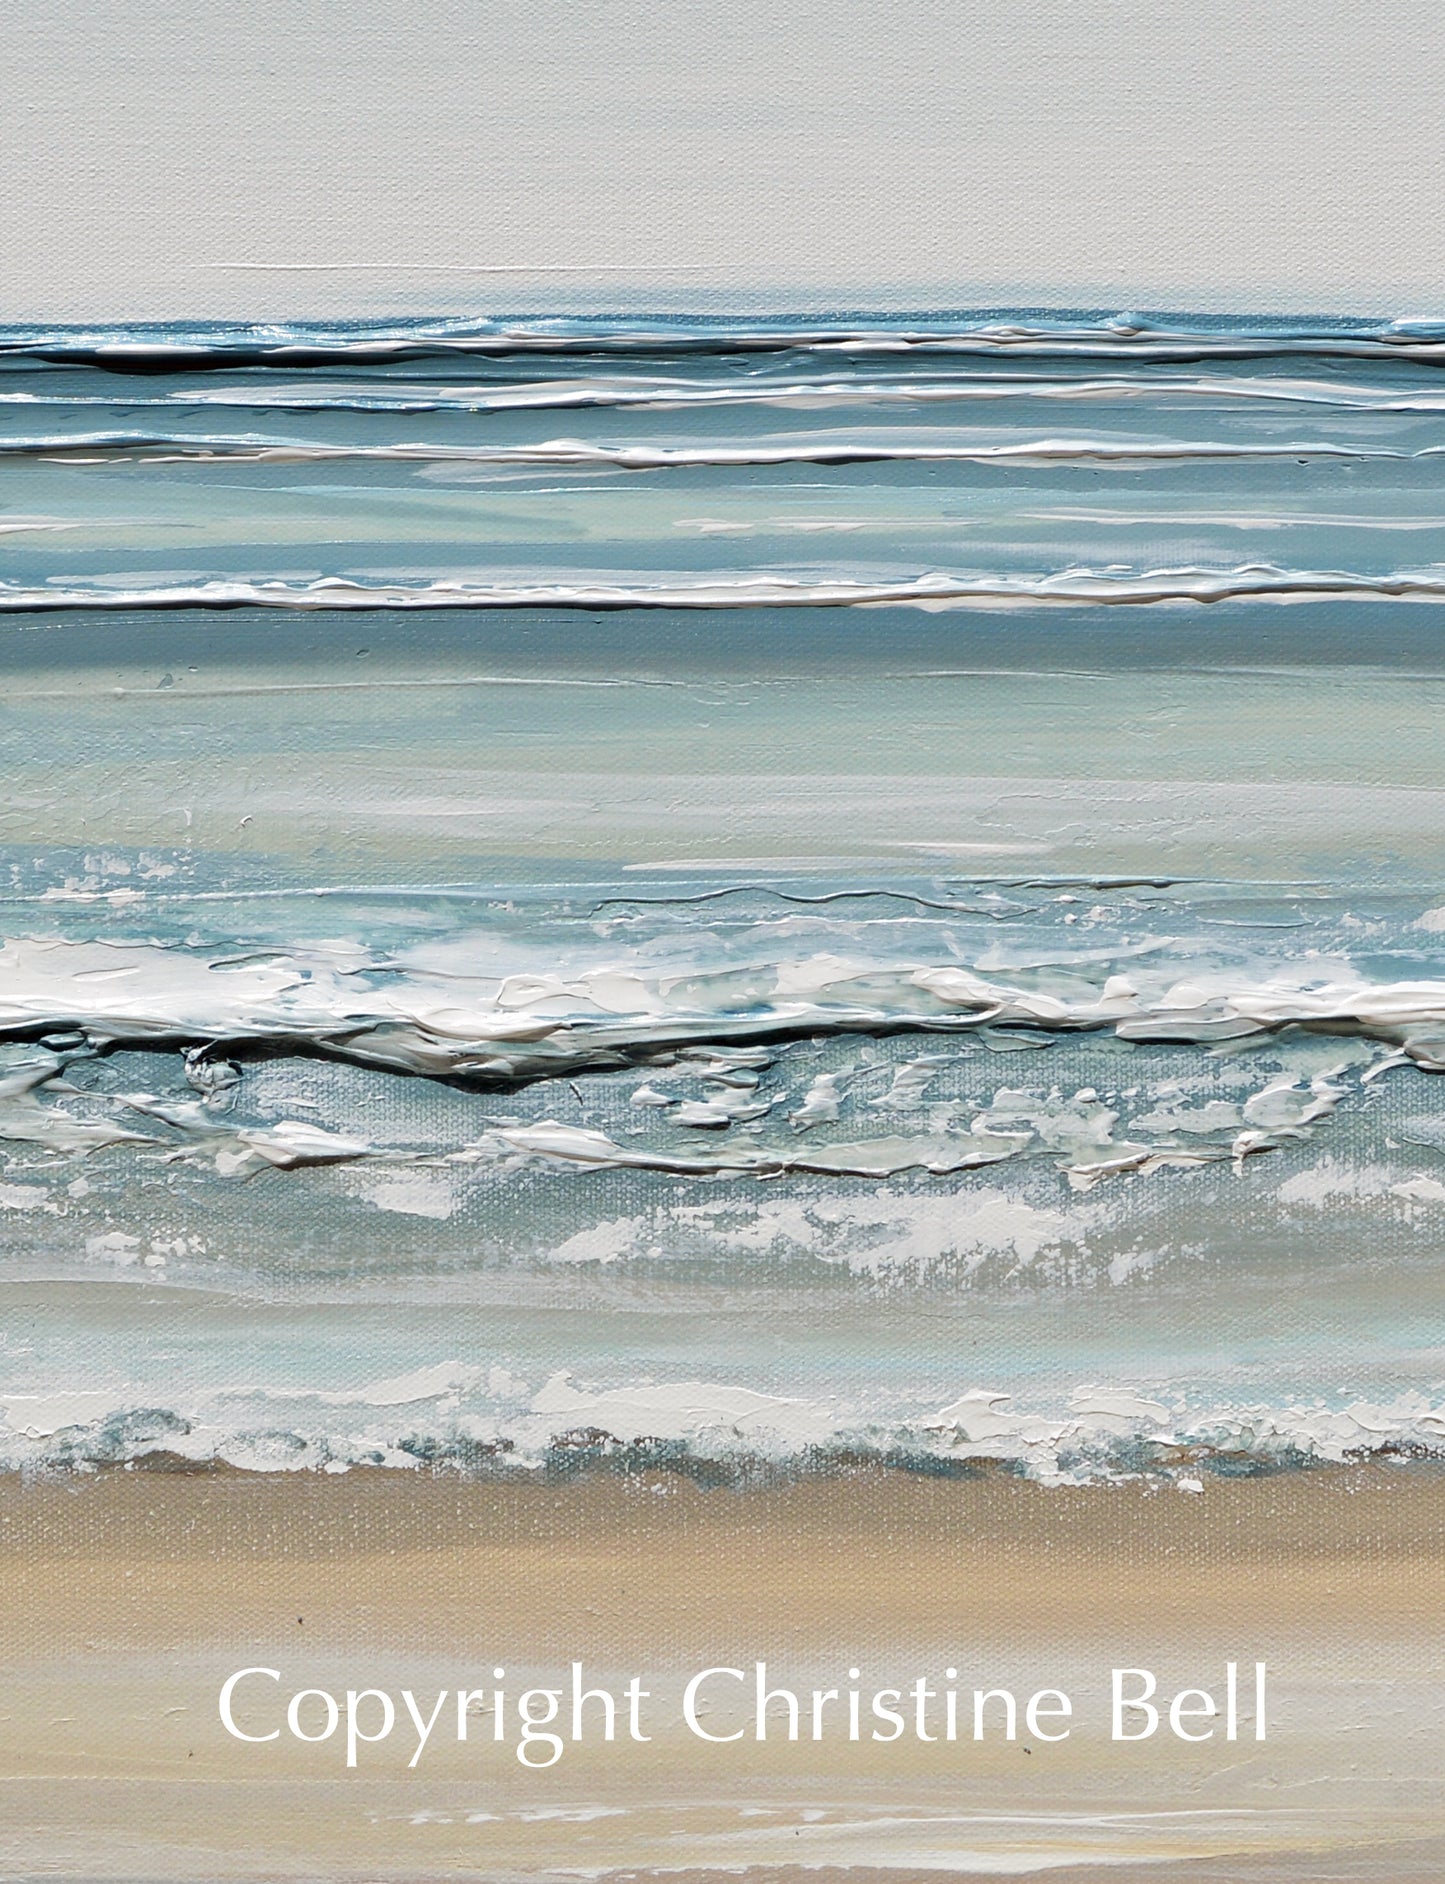 "Sea Salt" ORIGINAL Art Coastal Abstract Painting Textured Ocean Waves Beach Seafoam Green Blue White 30x24"